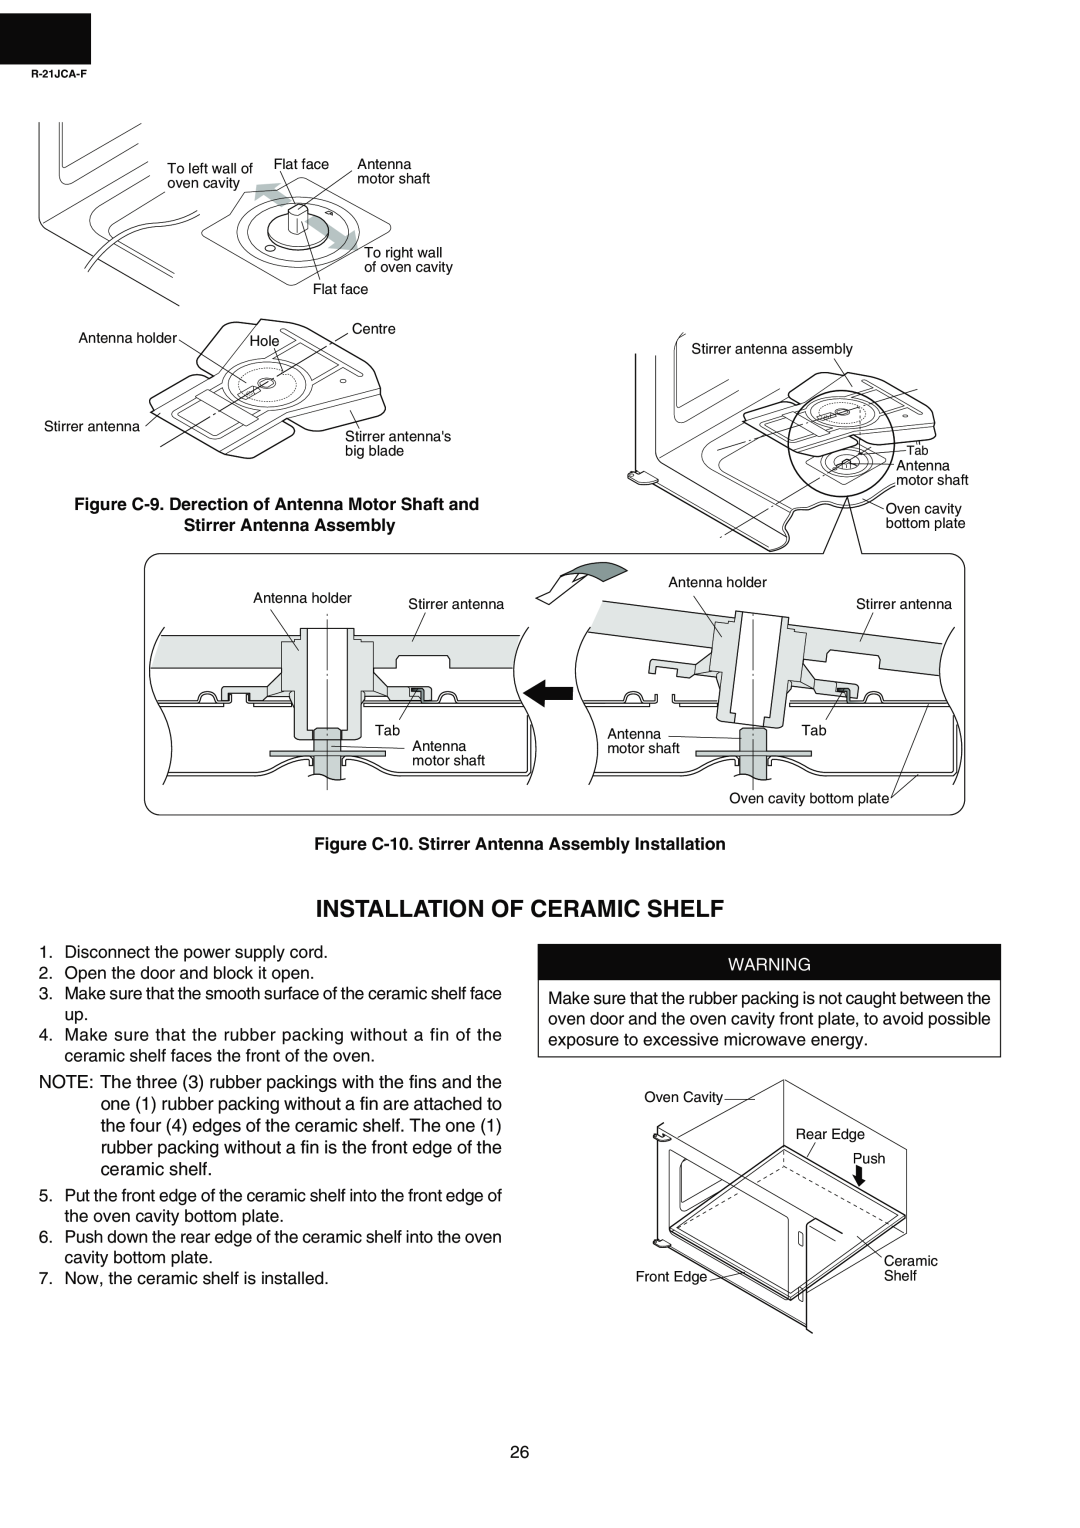 Sharp R-21JCA-F service manual Installation Of Ceramic Shelf, Figure C-10. Stirrer Antenna Assembly Installation 